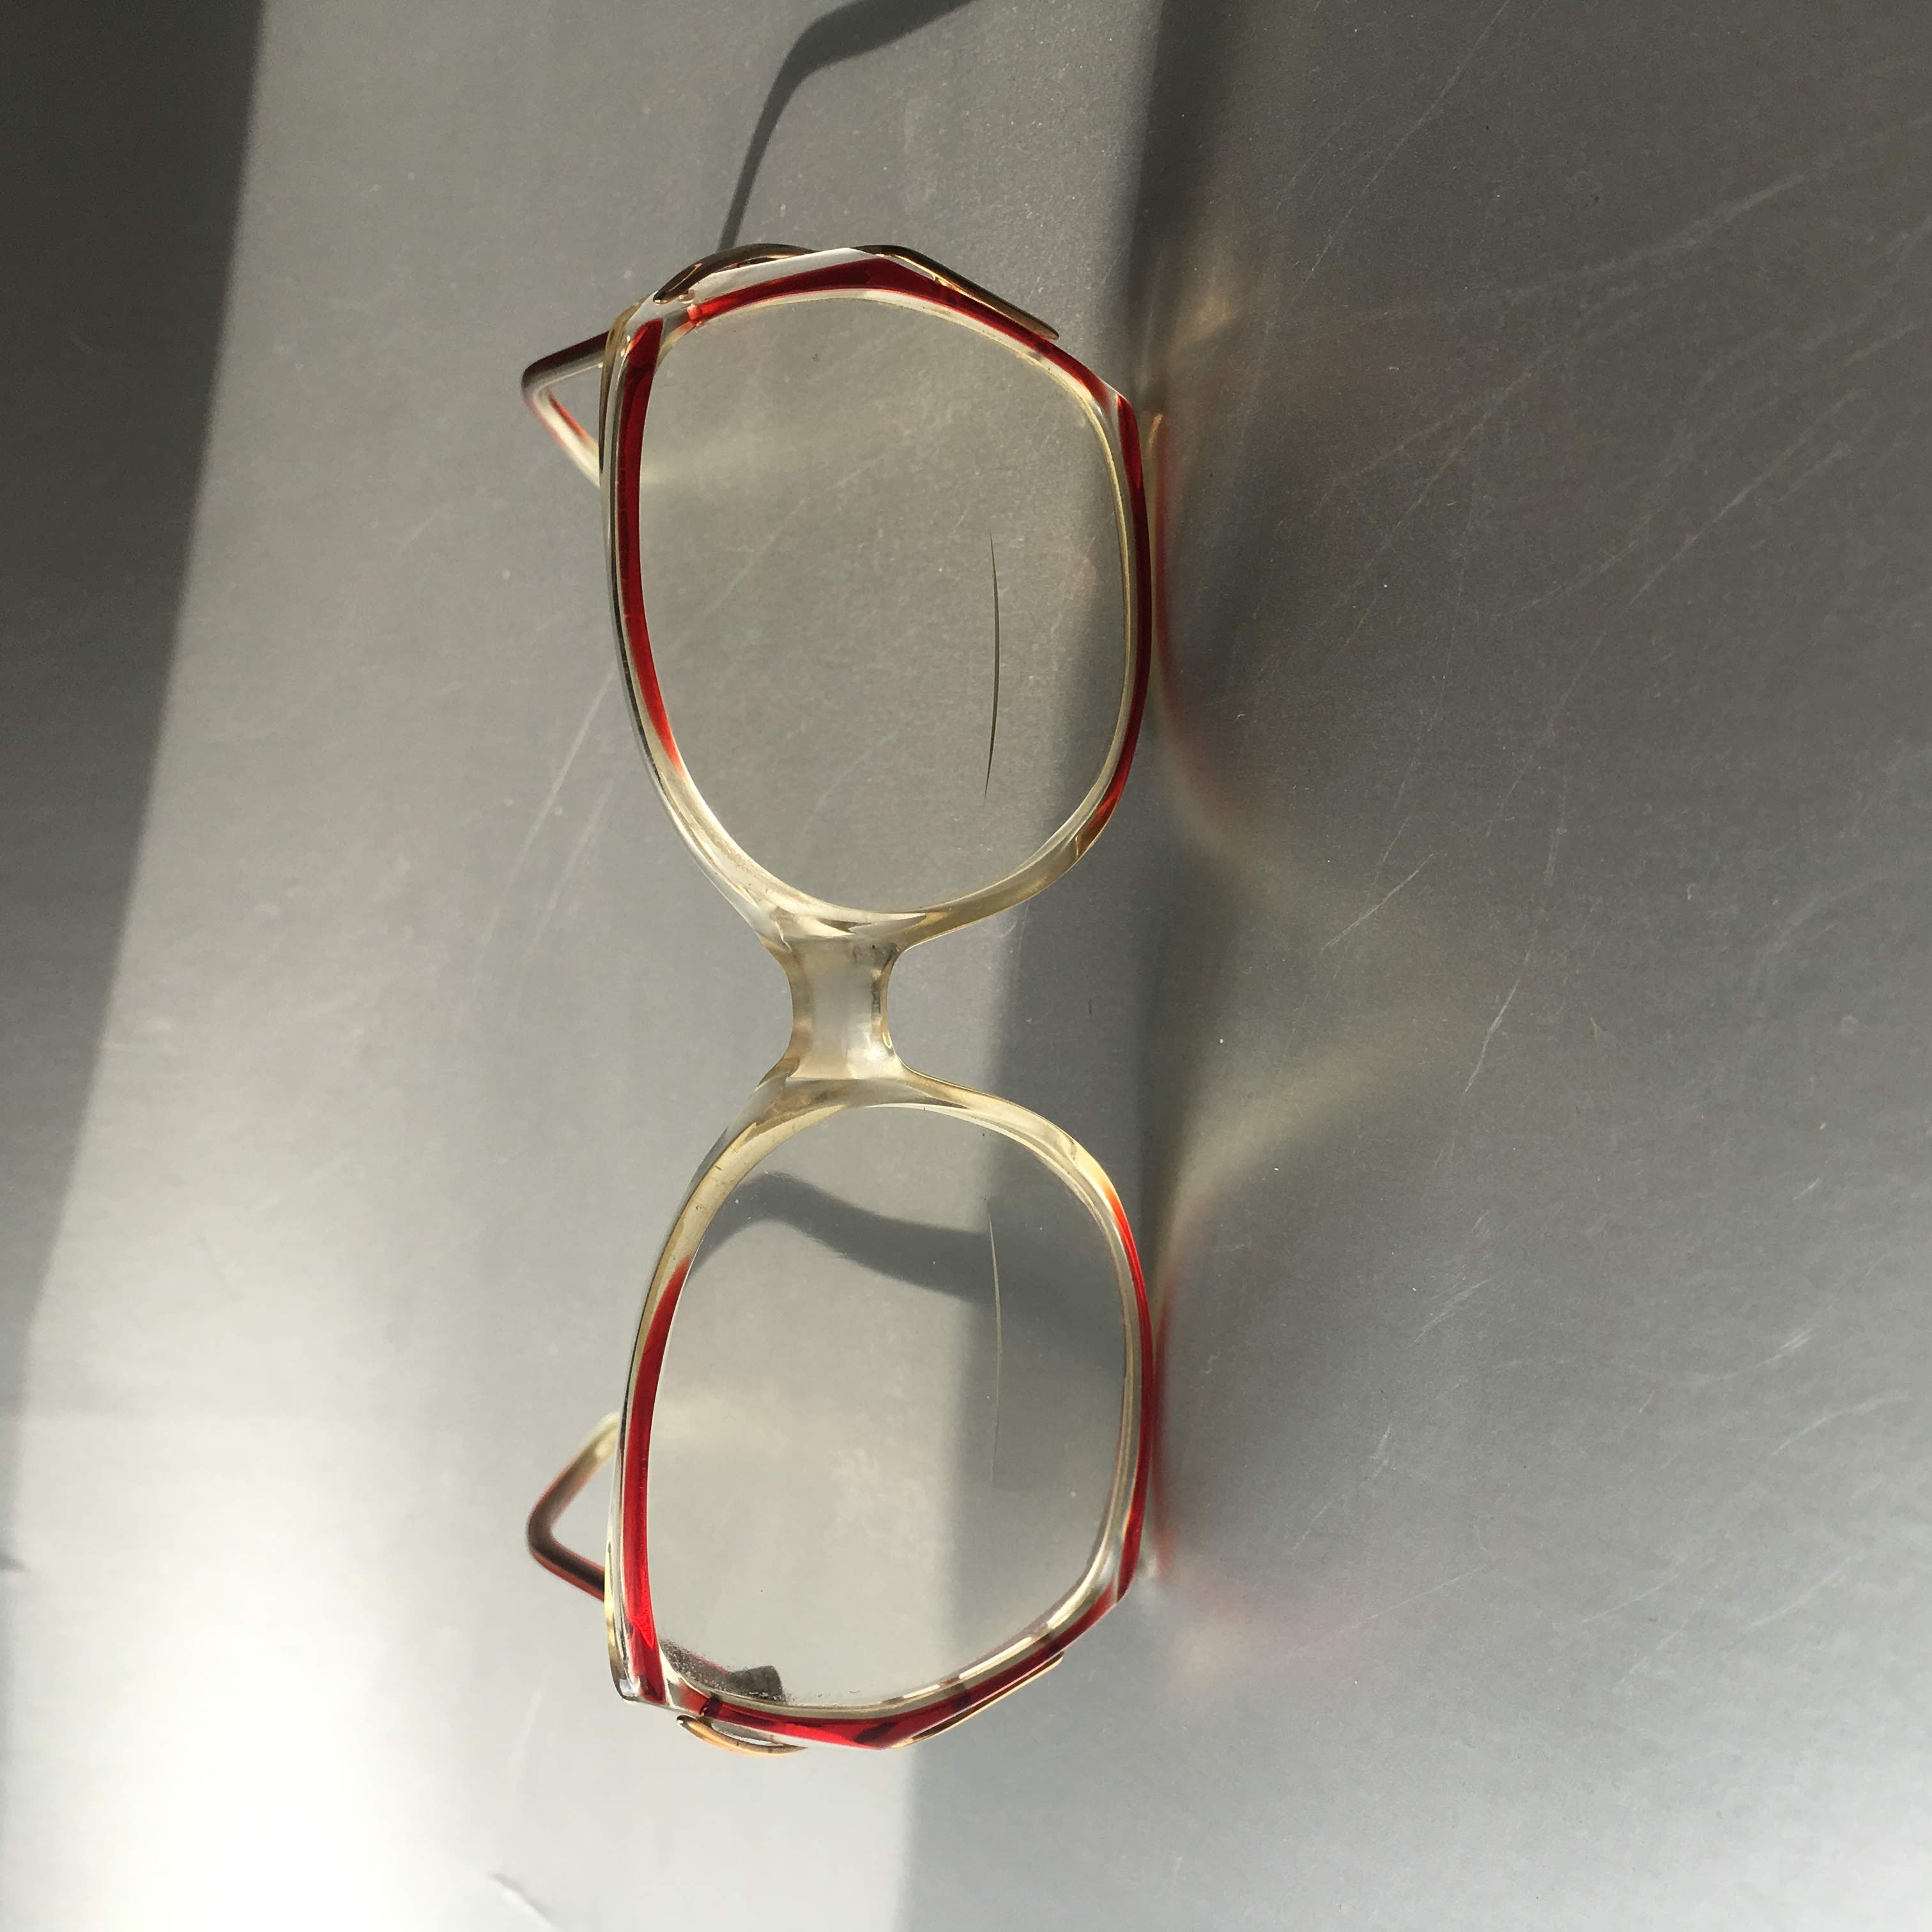 Catherine Red Glasses Eyewear Vintage Accessory